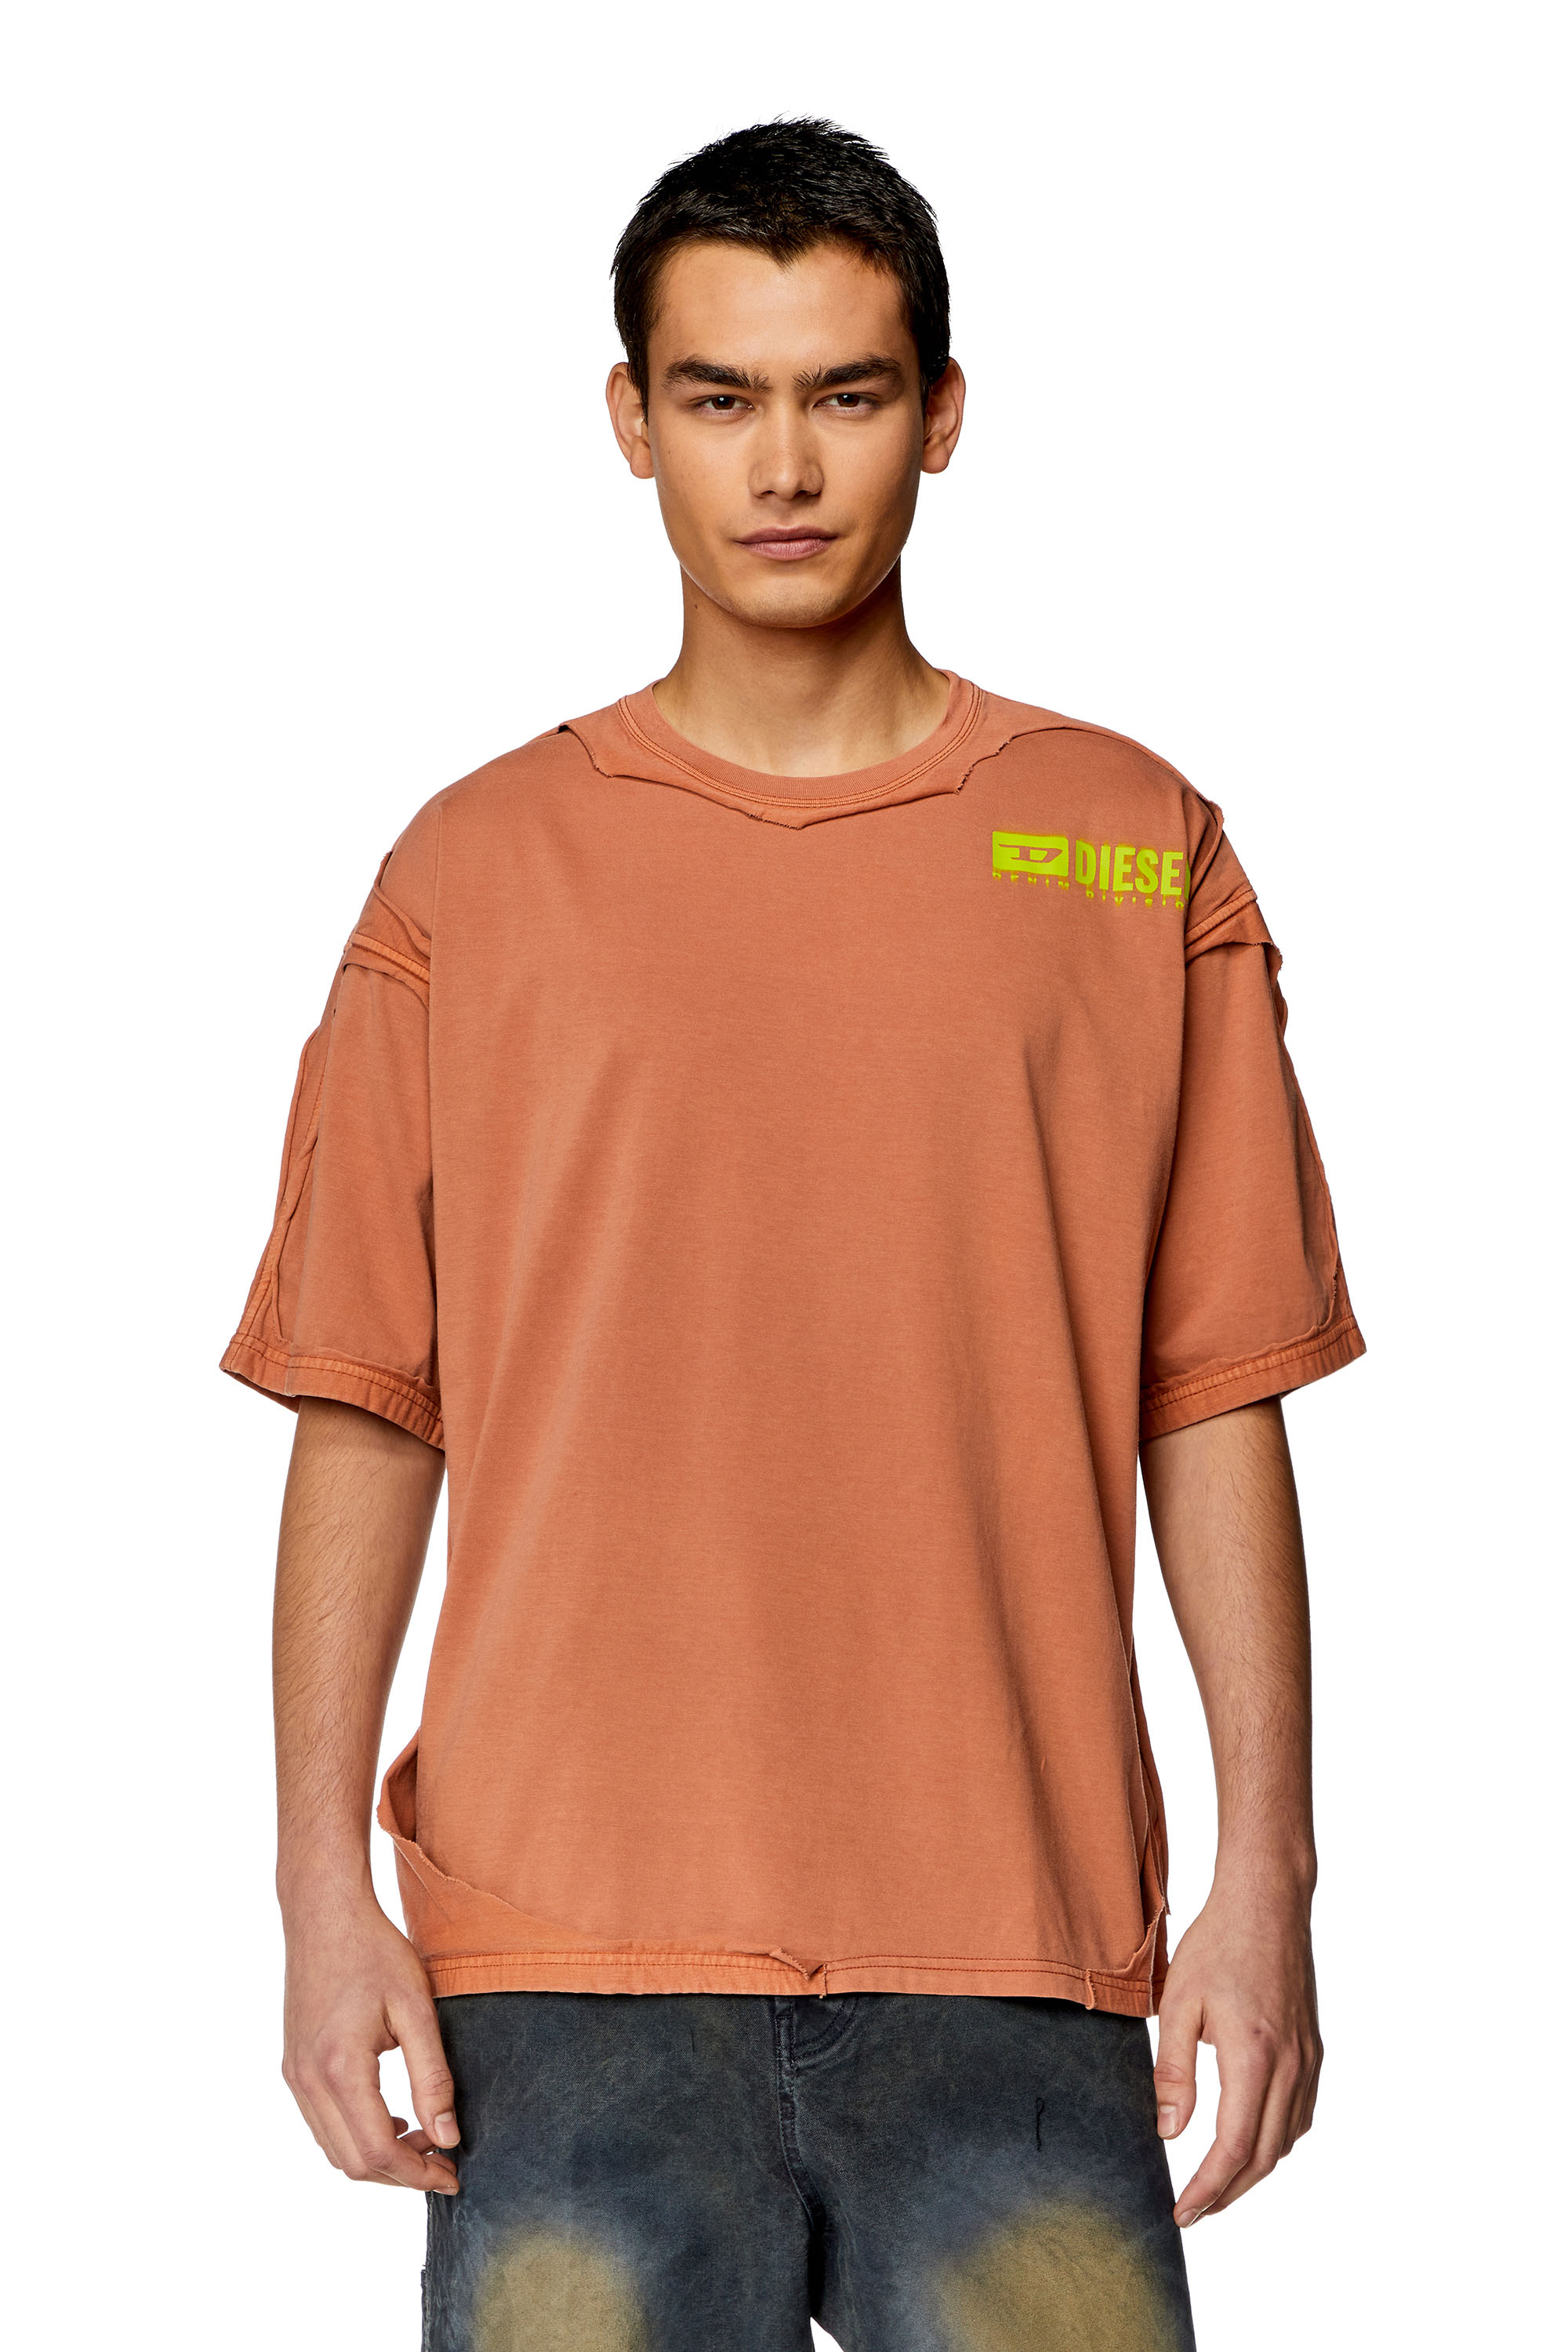 Diesel - T-BOXT-DBL, Homme T-shirt avec effet peel-off destroy in Orange - Image 1